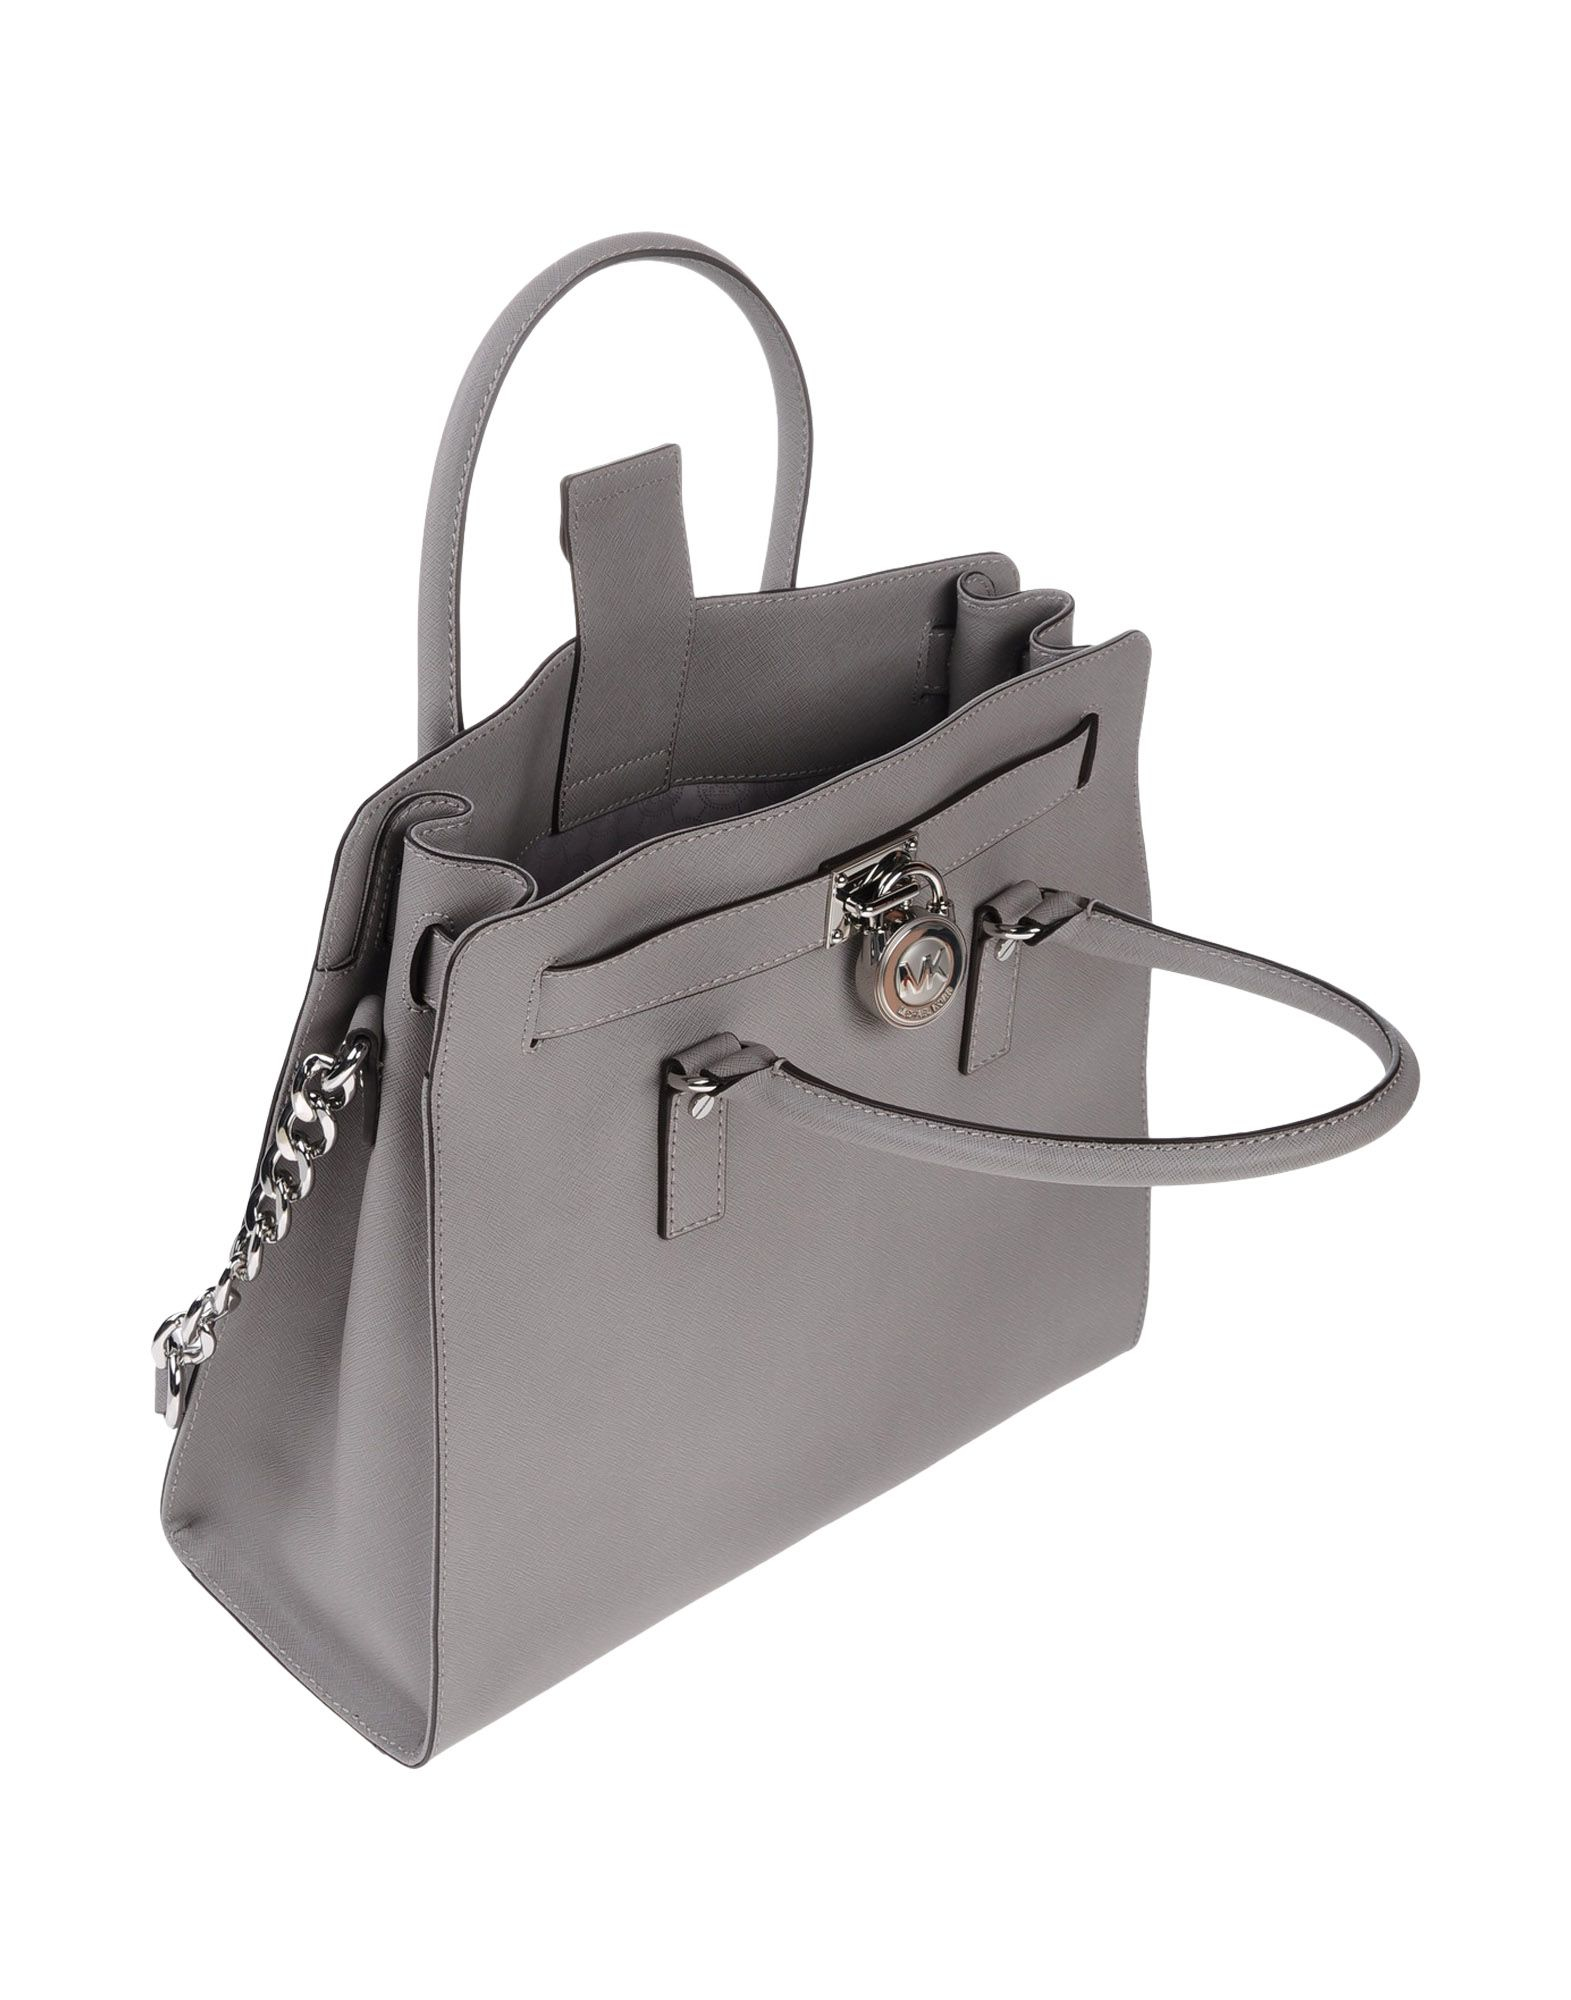 Lyst - Michael Michael Kors Handbag in Gray